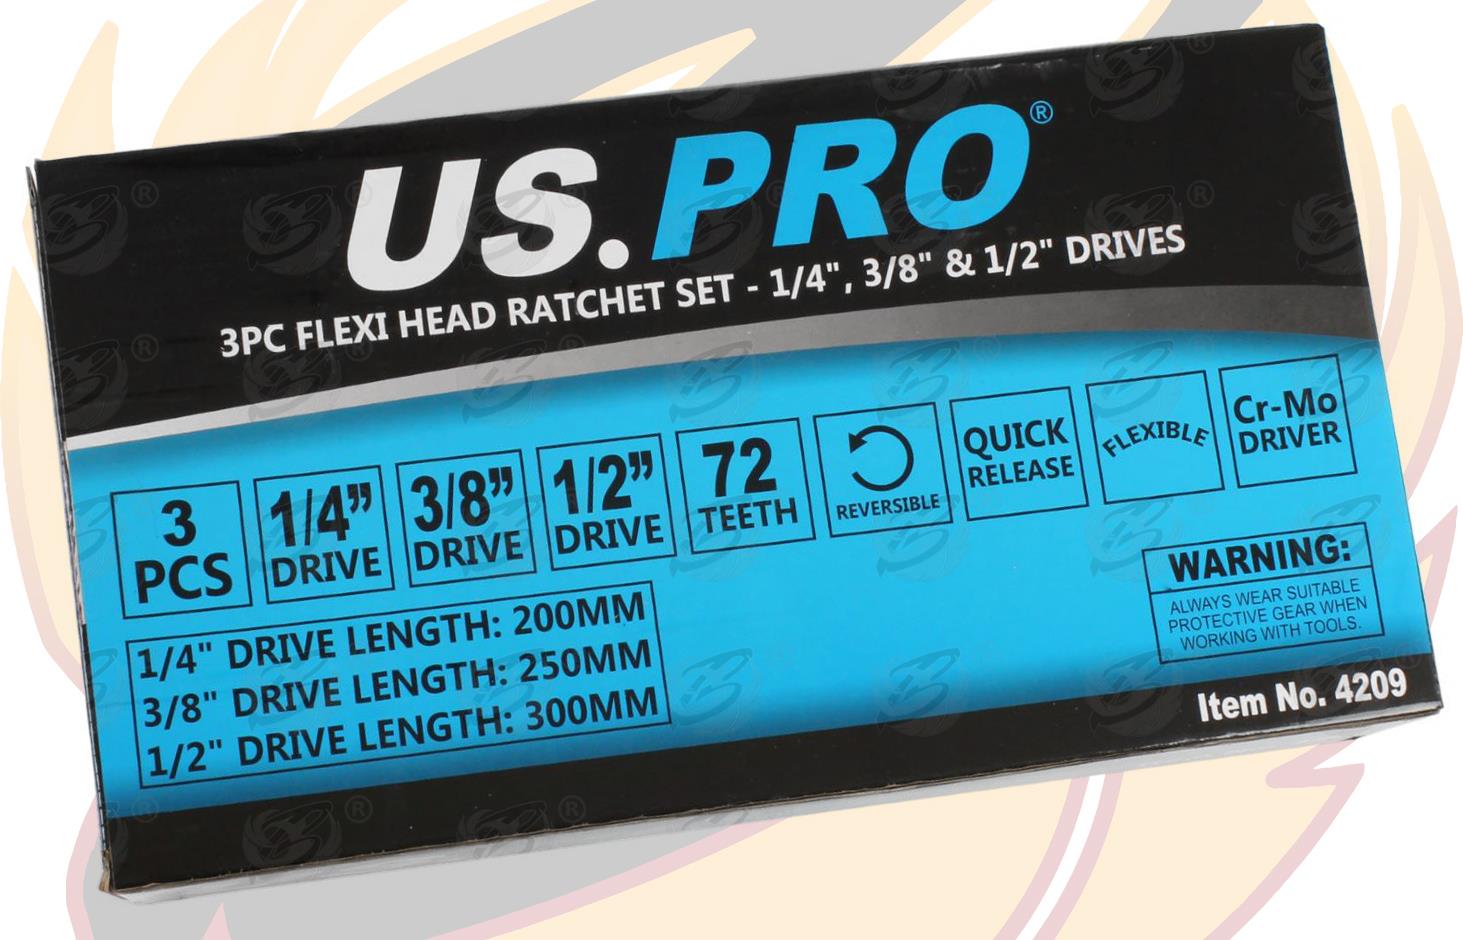 US PRO 3PCS 1/4" & 3/8" & 1/2" DRIVE 72 TOOTH FLEXI RATCHET HANDLES